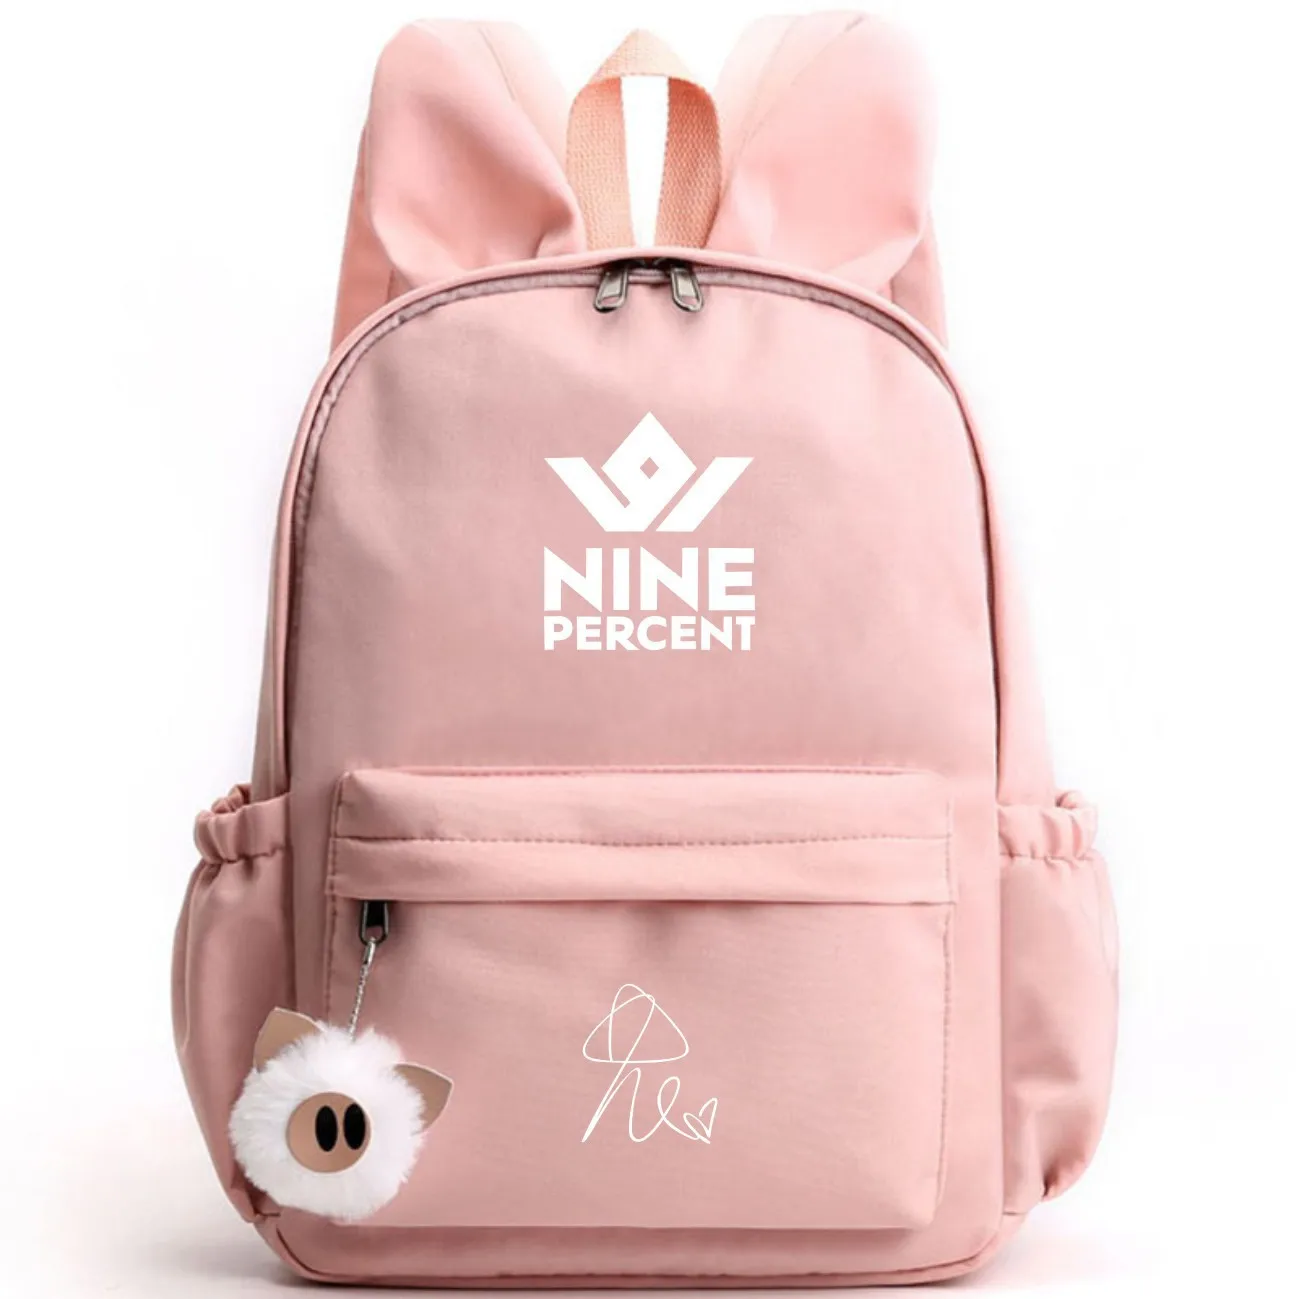 

New Fashion Kpop Nine Percent Stars Backpack School Bags Mochila Travel Laptop Bags Rabbit Ears Cute Backpack for Teenage Girls